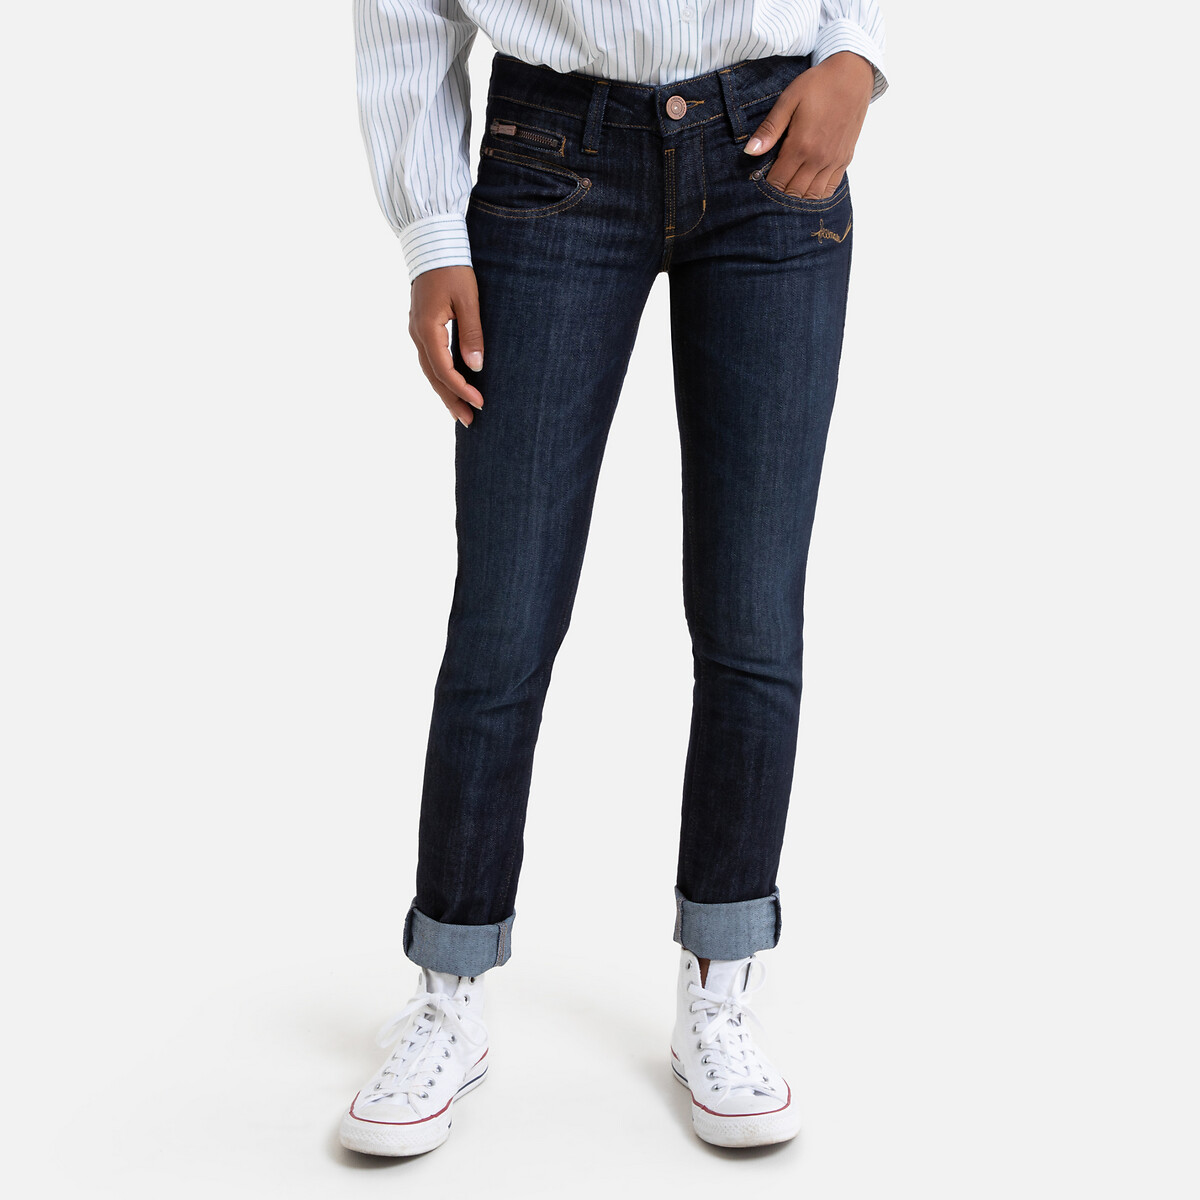 Alexa Slim SDM Jeans, Mid Rise